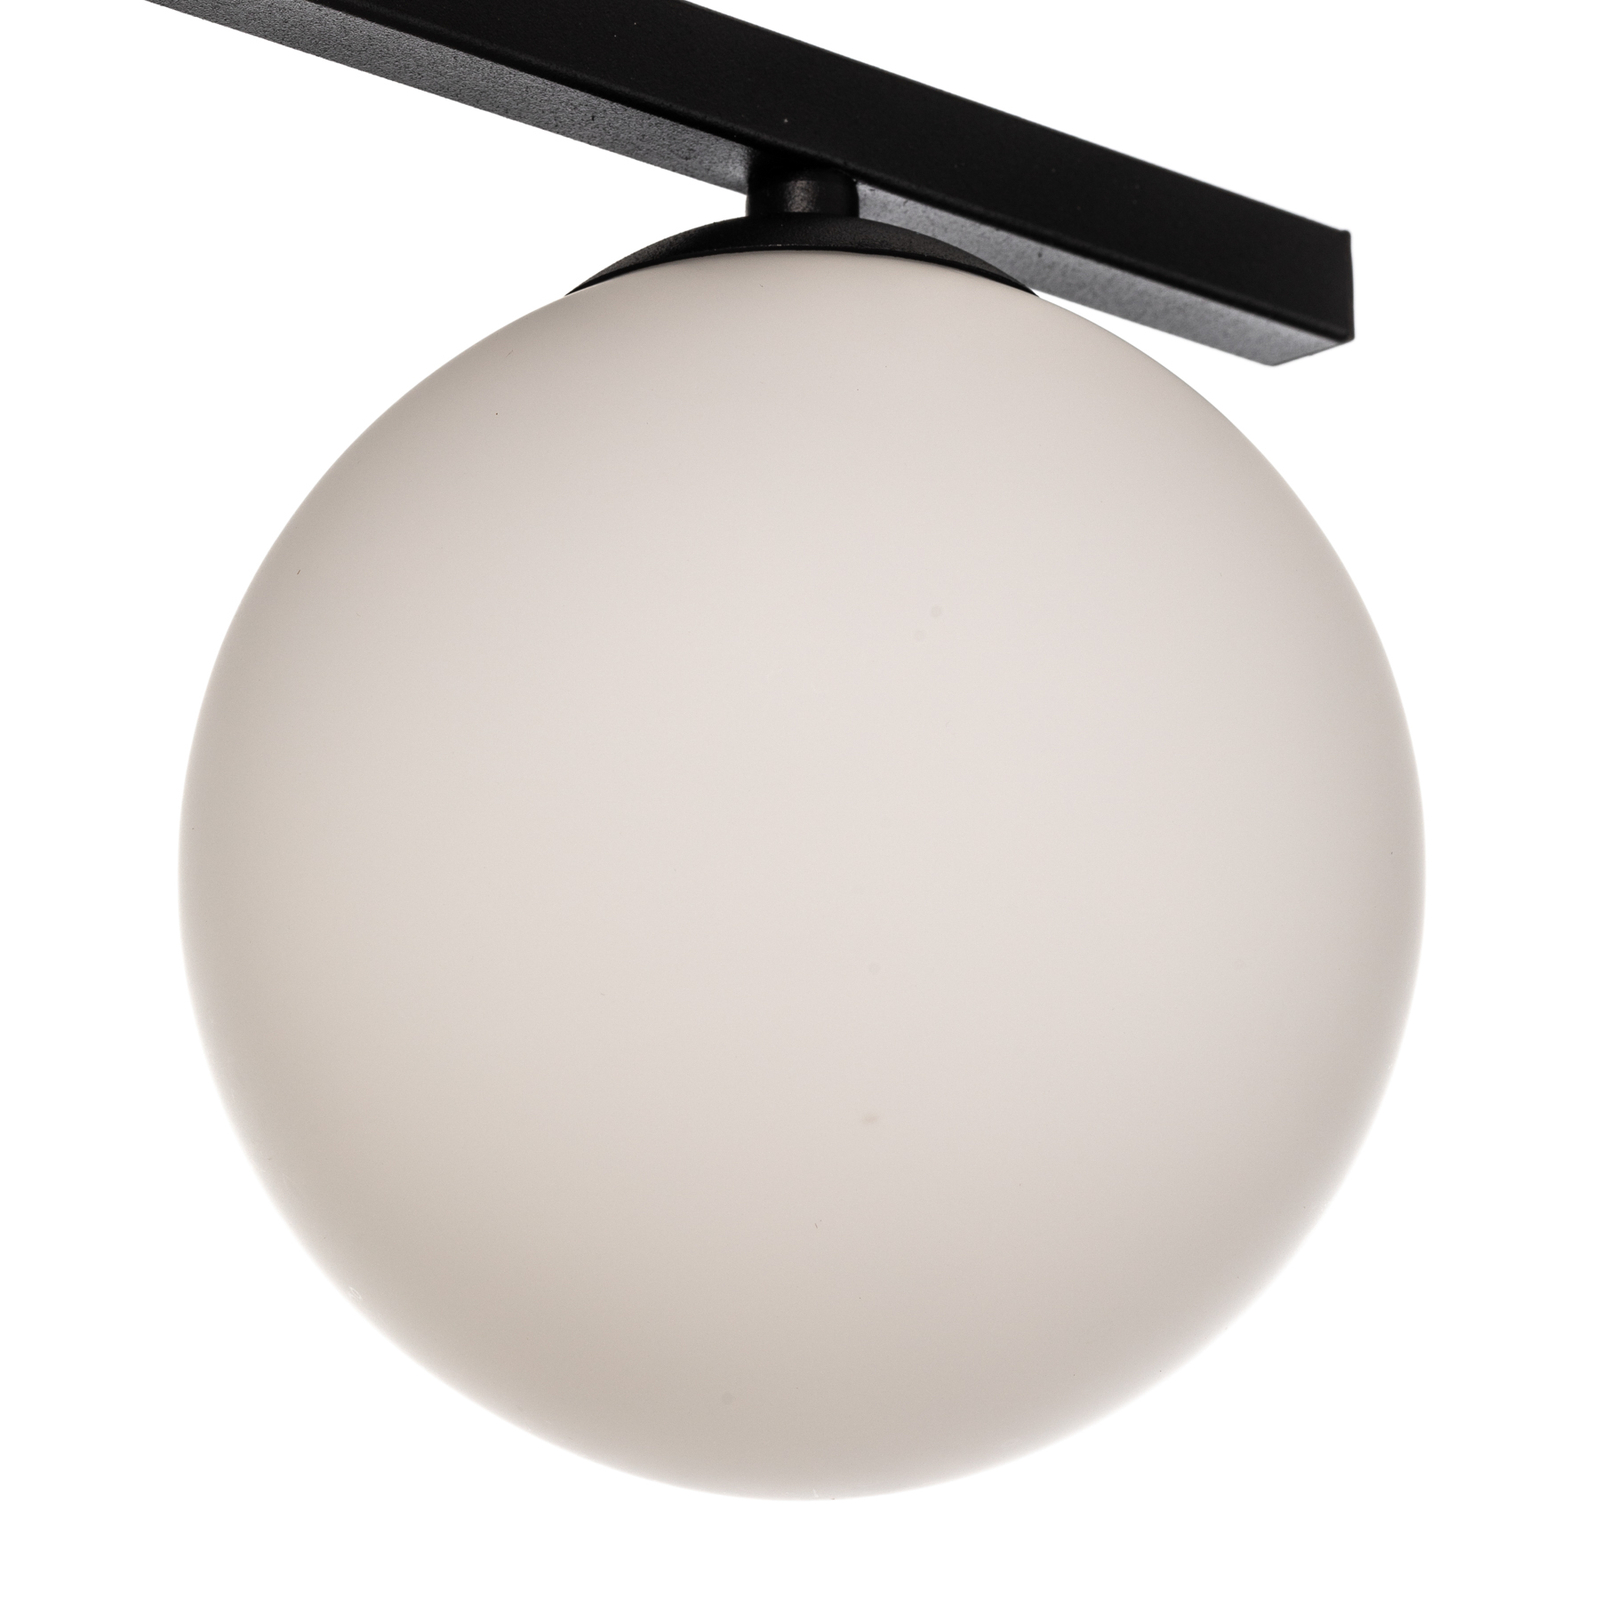 Deckenlampe Smart, schwarz/opal, 3-flammig